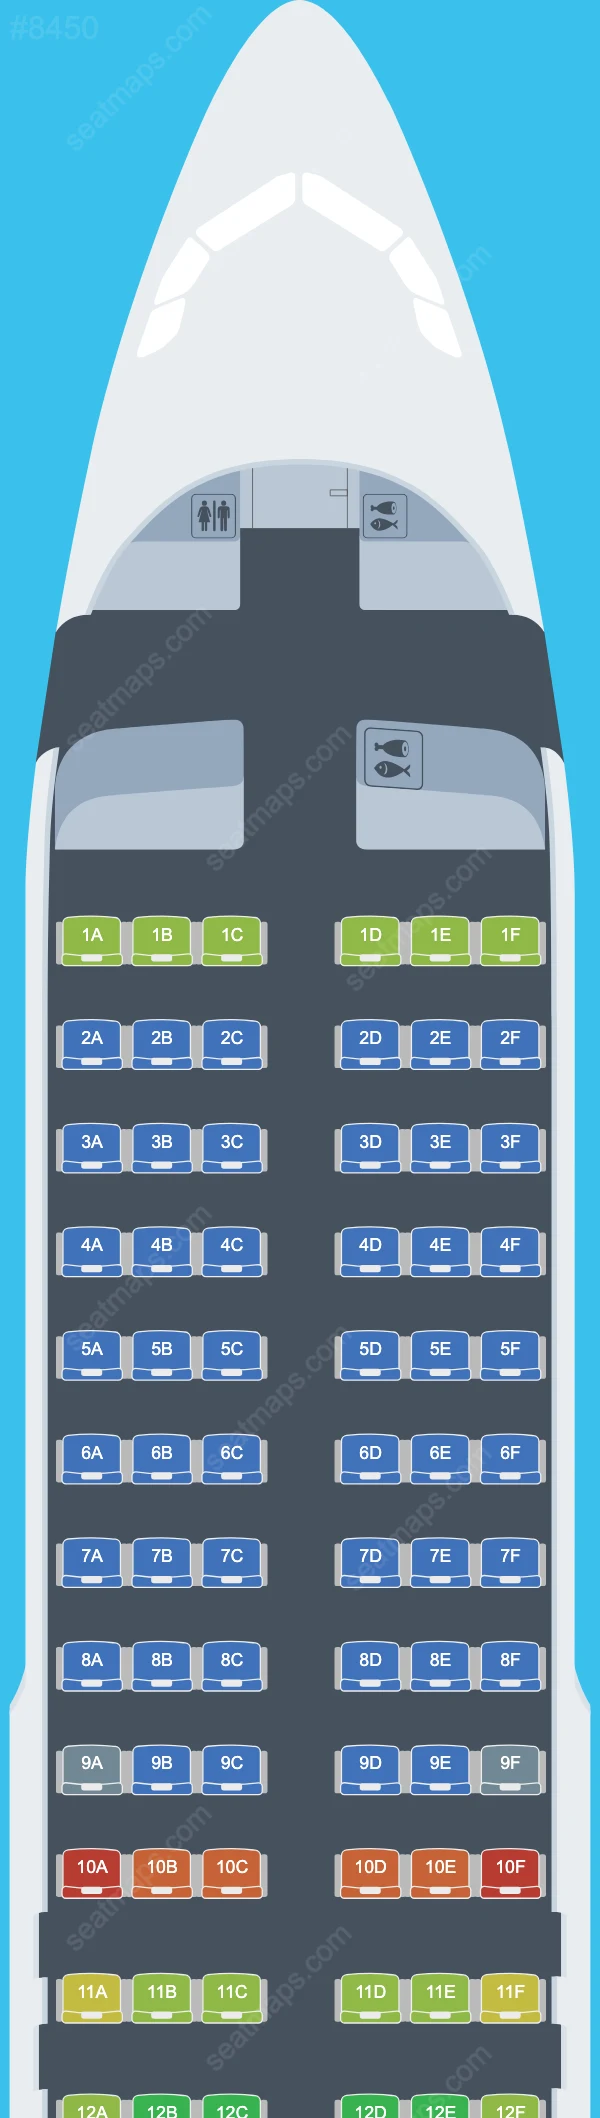 British Airways Airbus A320 Seat Maps A320-200neo V.1